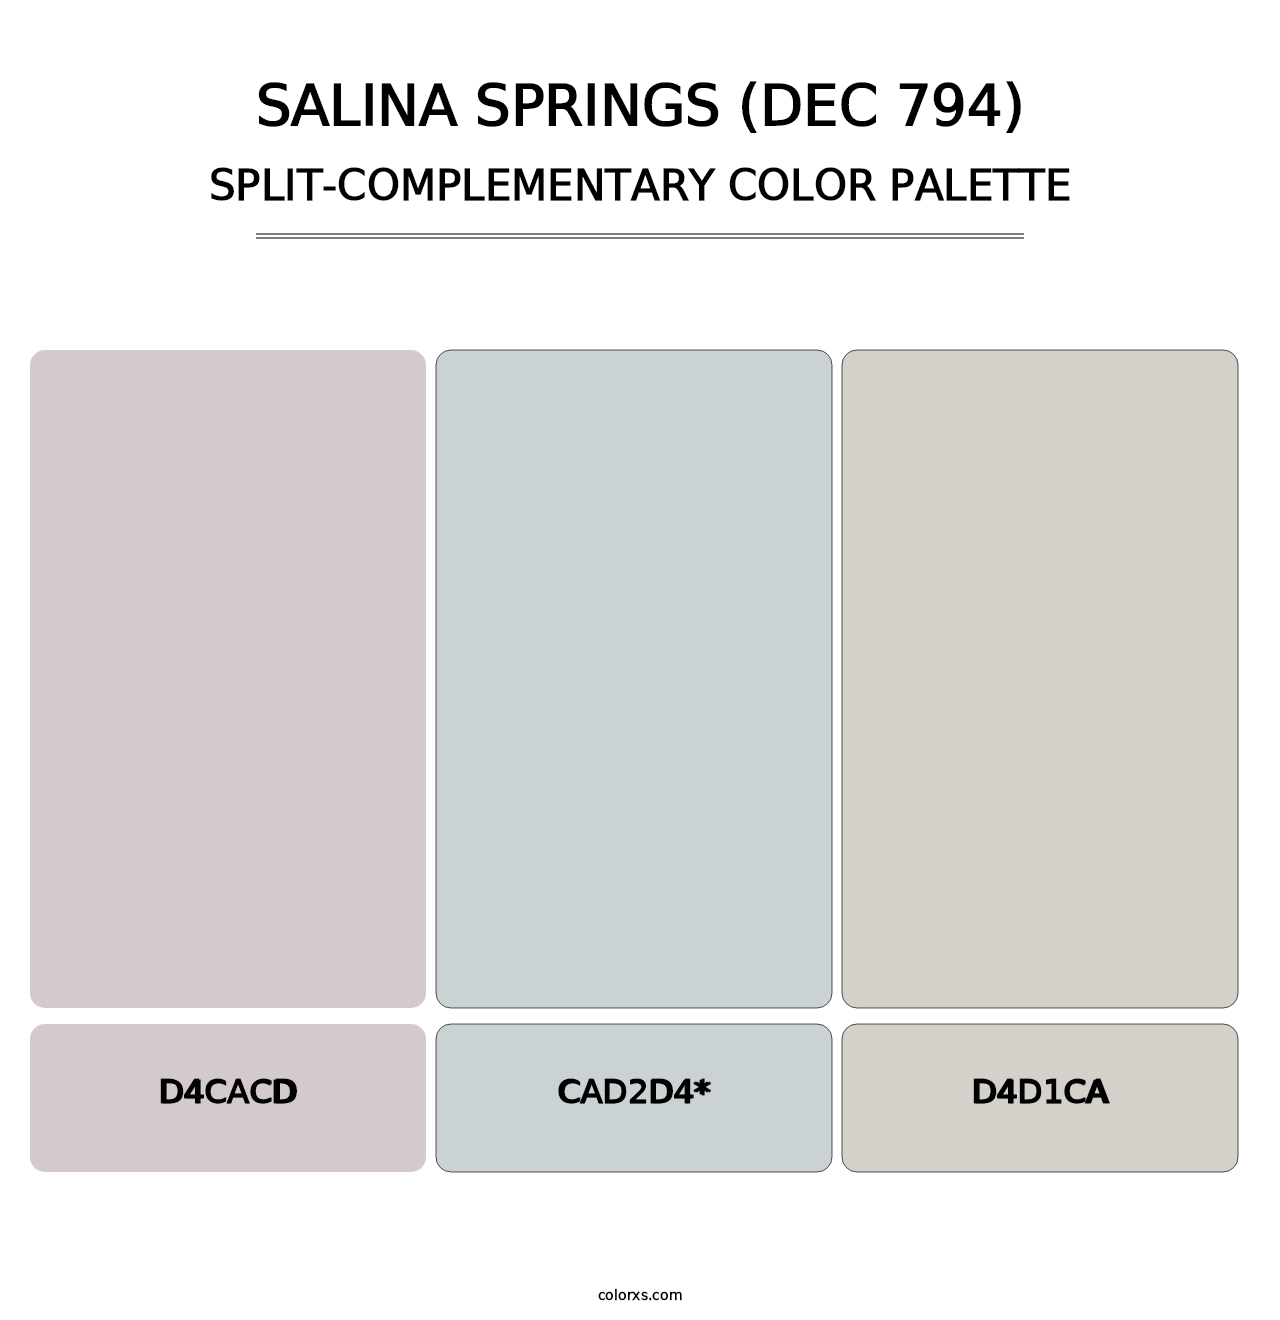 Salina Springs (DEC 794) - Split-Complementary Color Palette